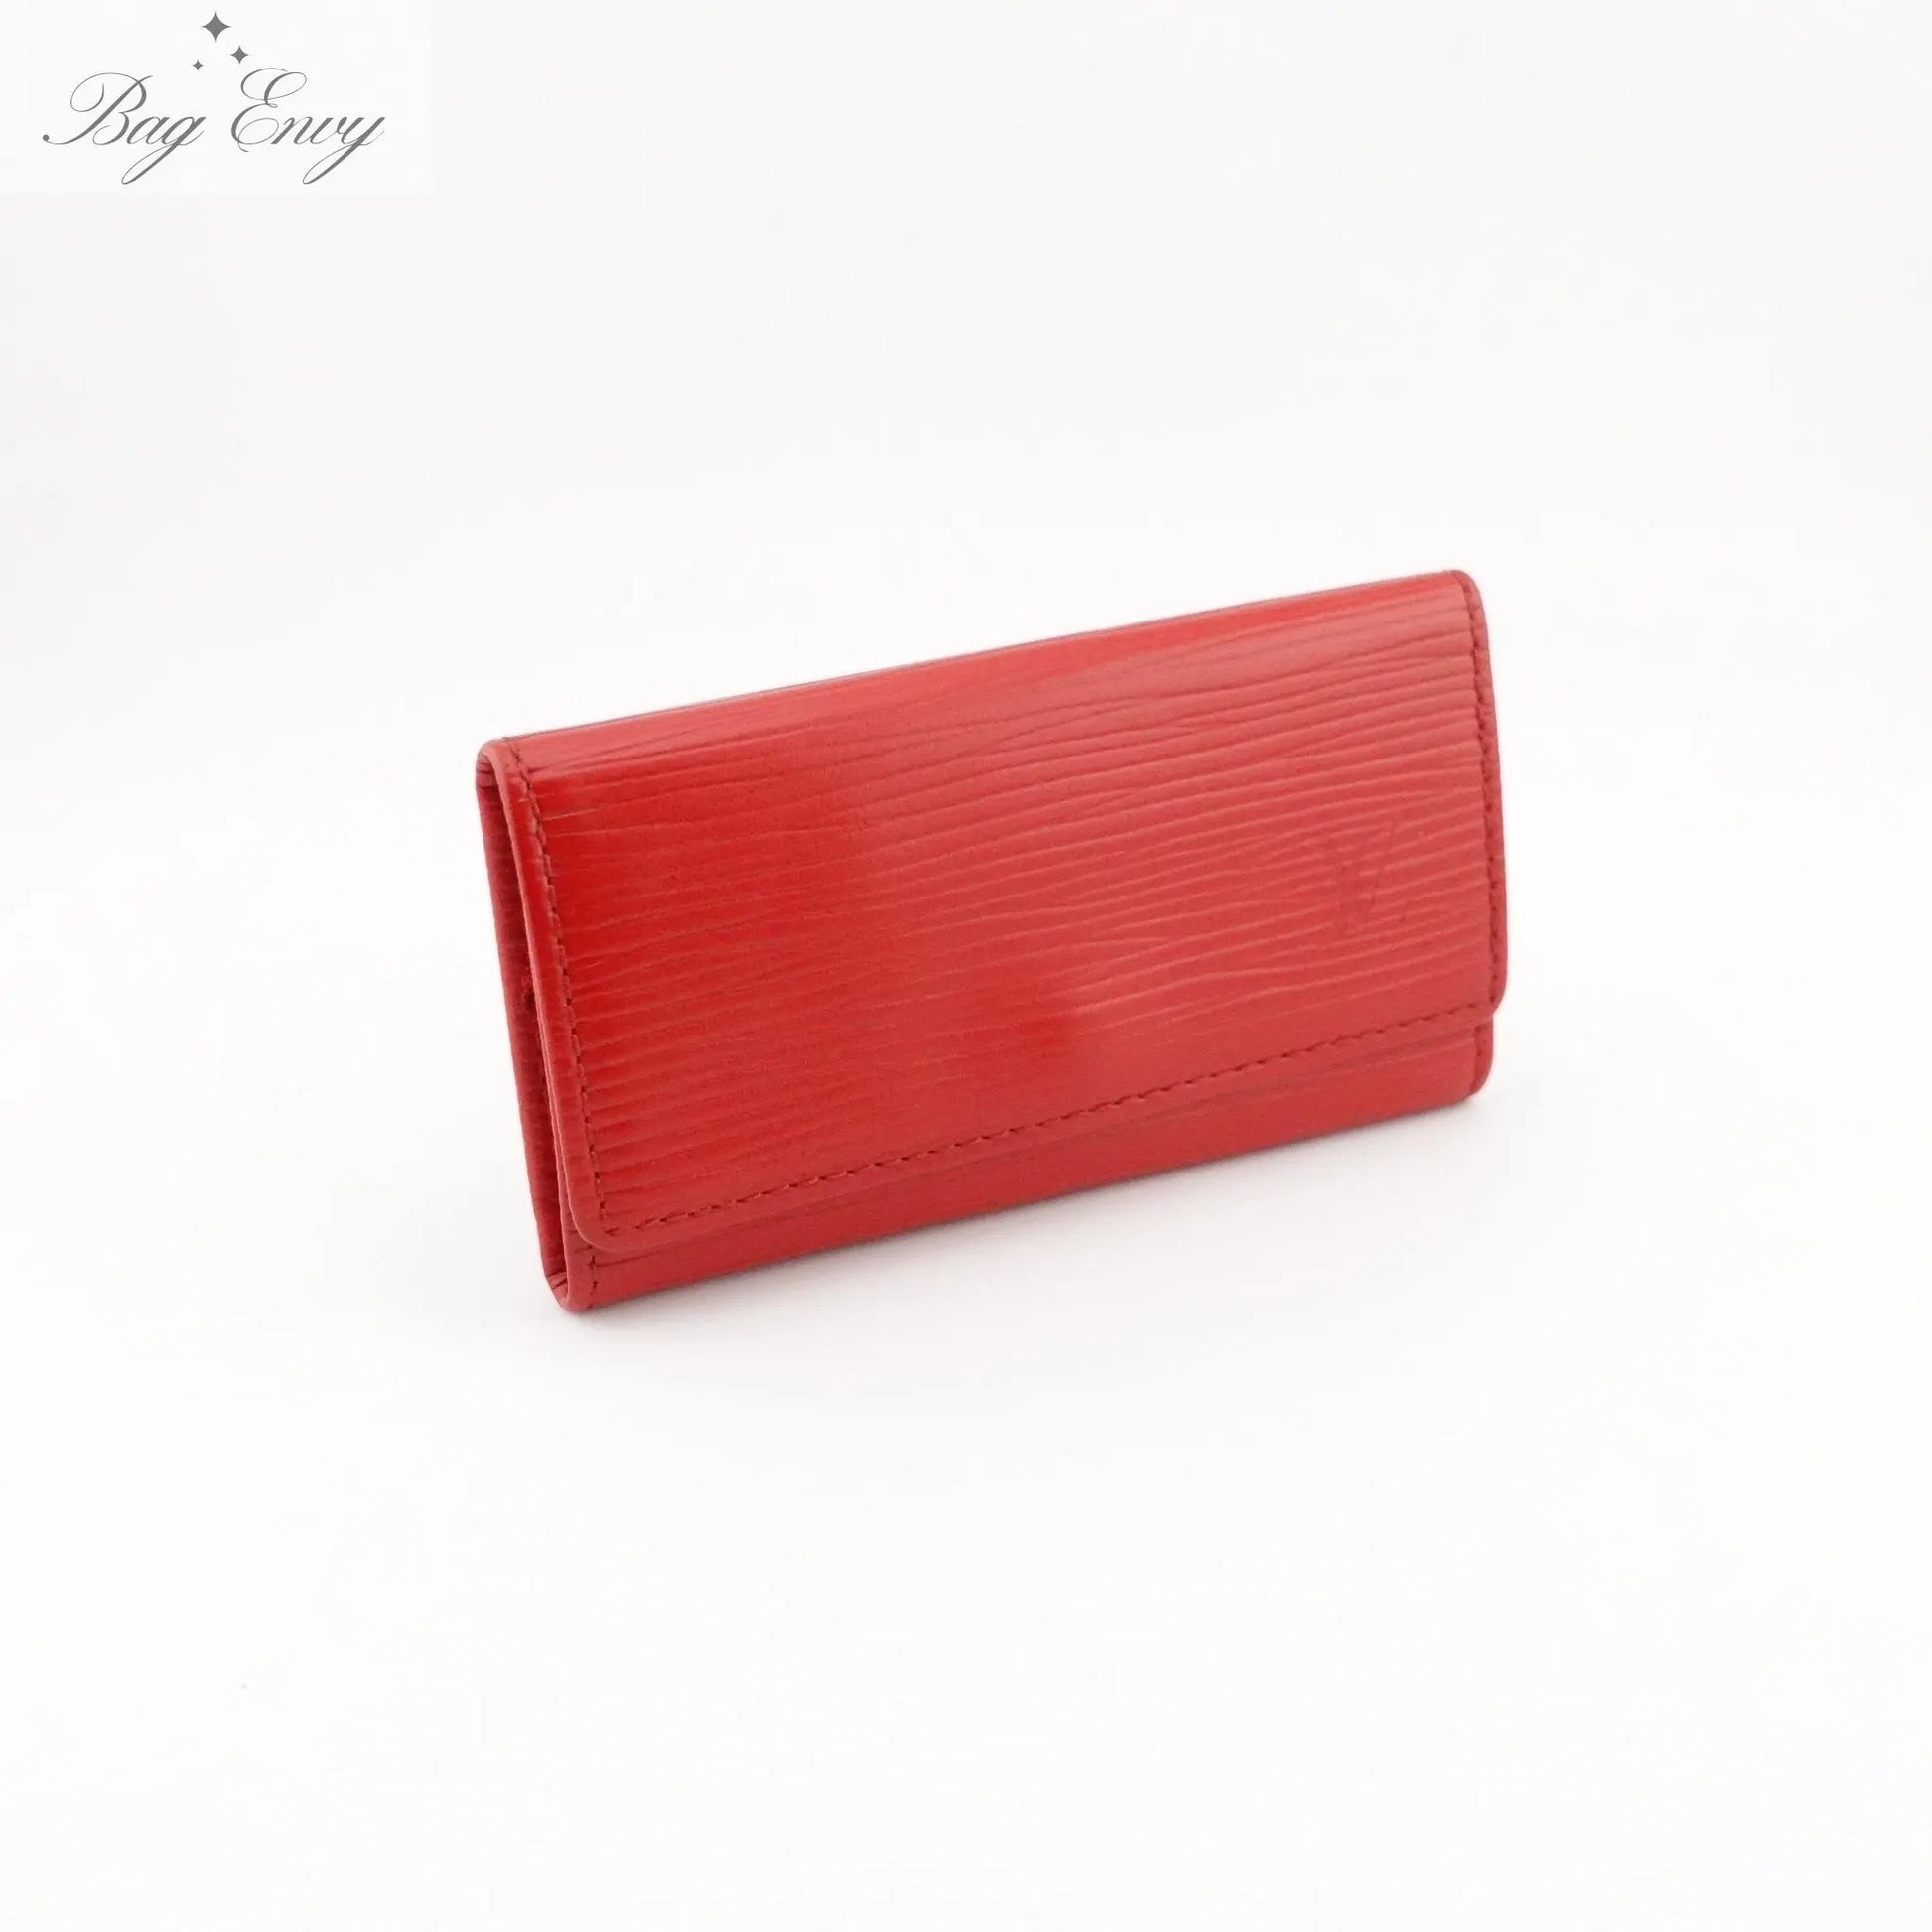 LOUIS VUITTON Epi 4 Key Holder/Card Case - Bag Envy